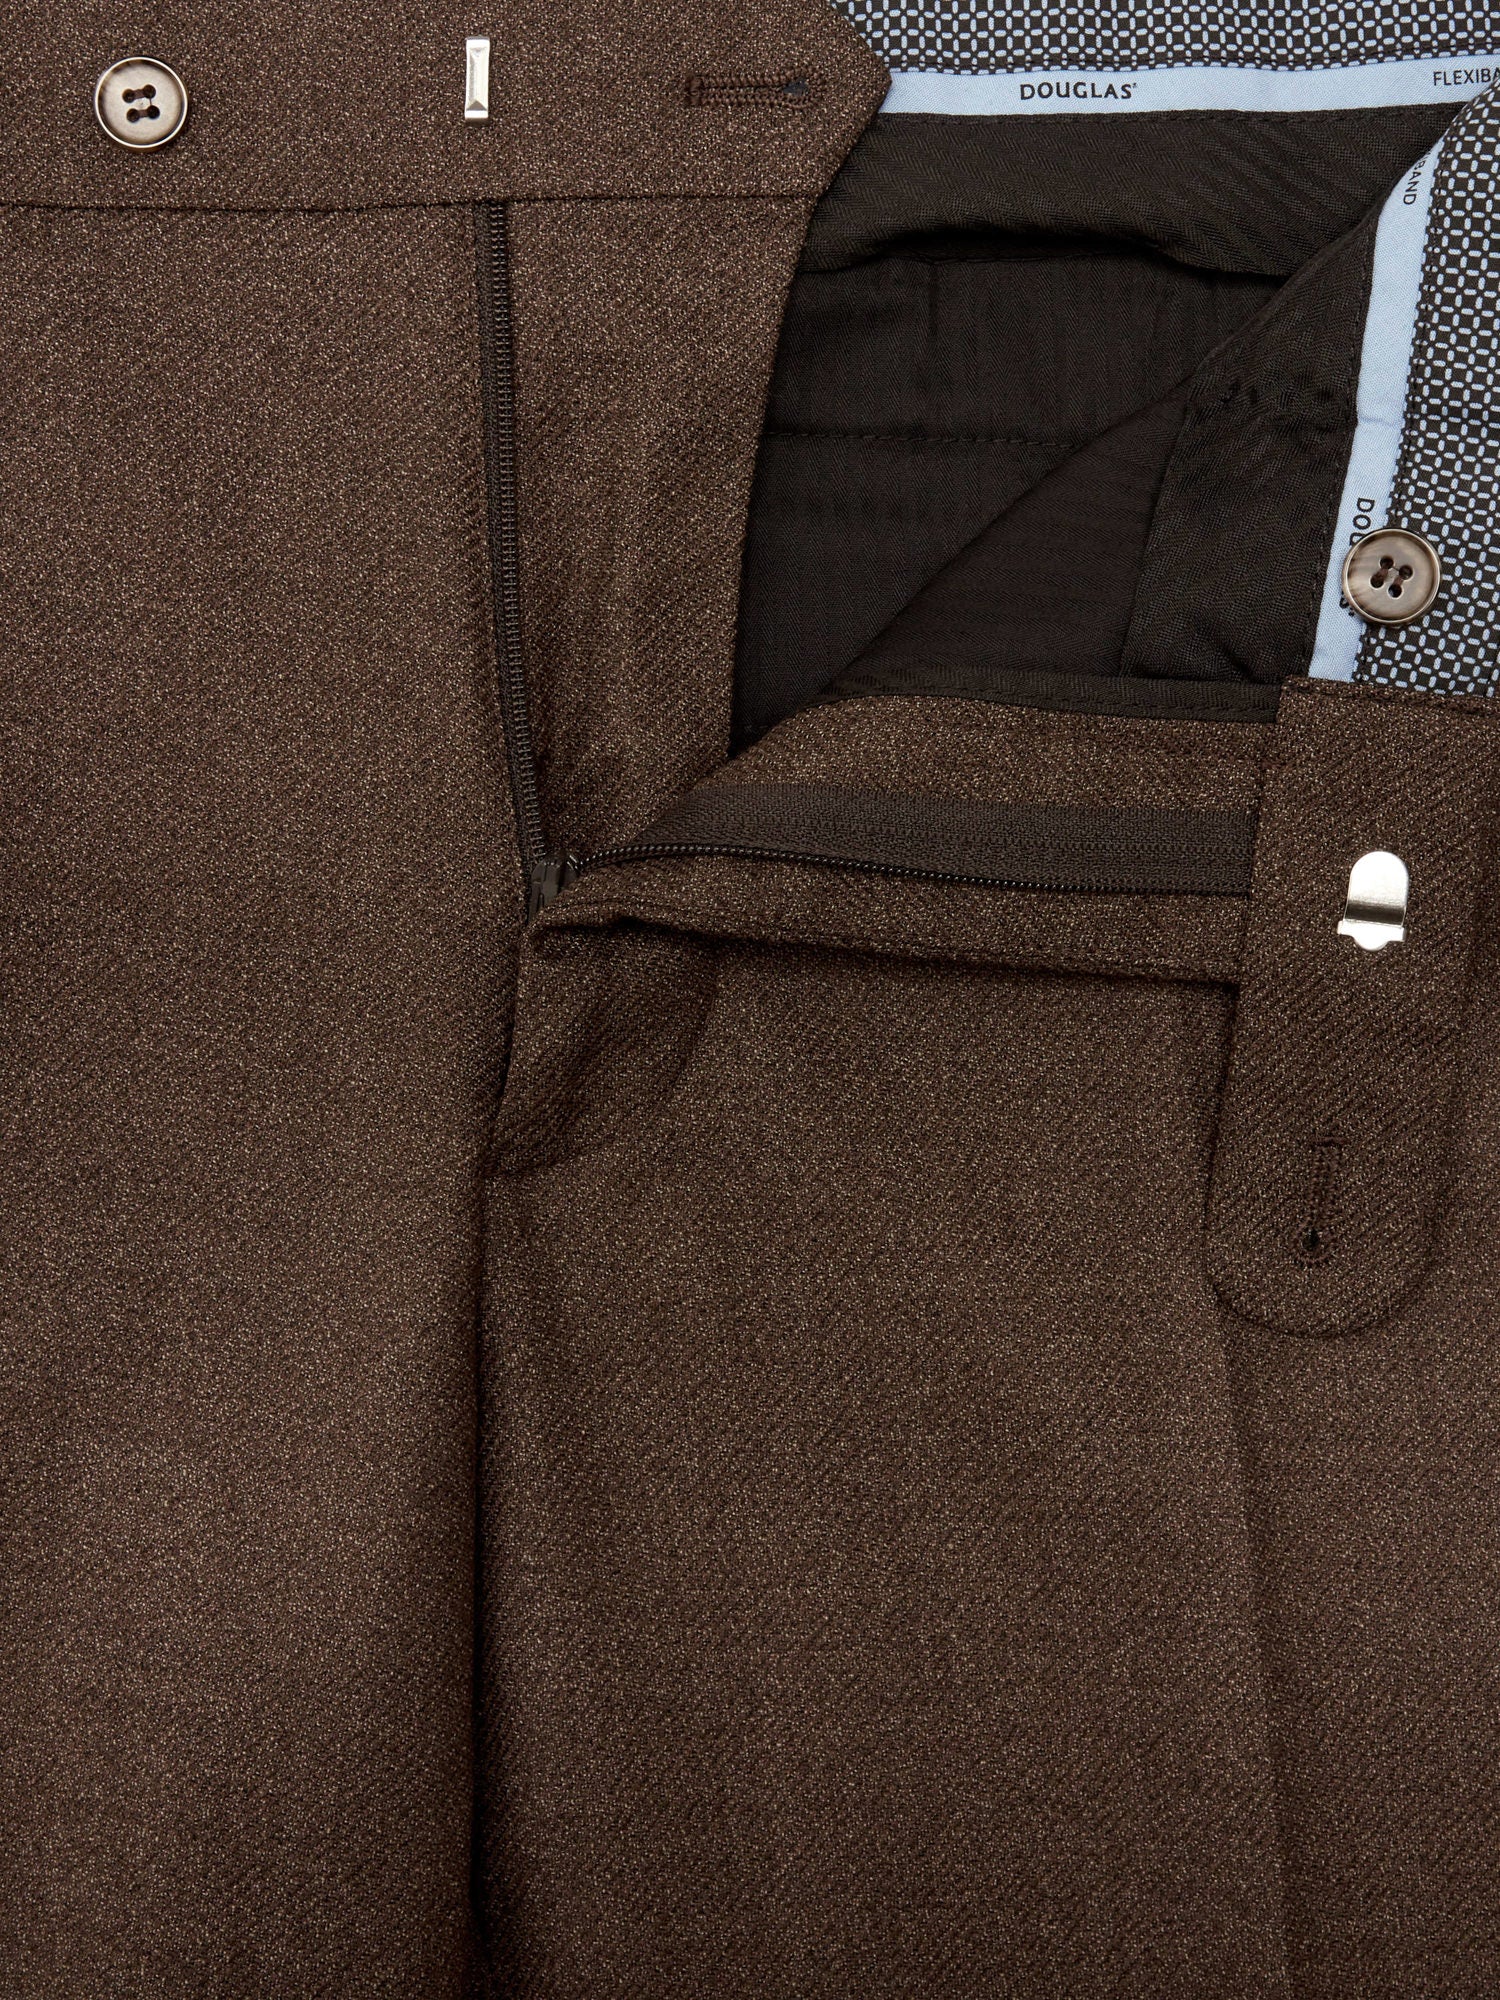 Douglas Brown Mix & Match Suit Trousers Regular Length